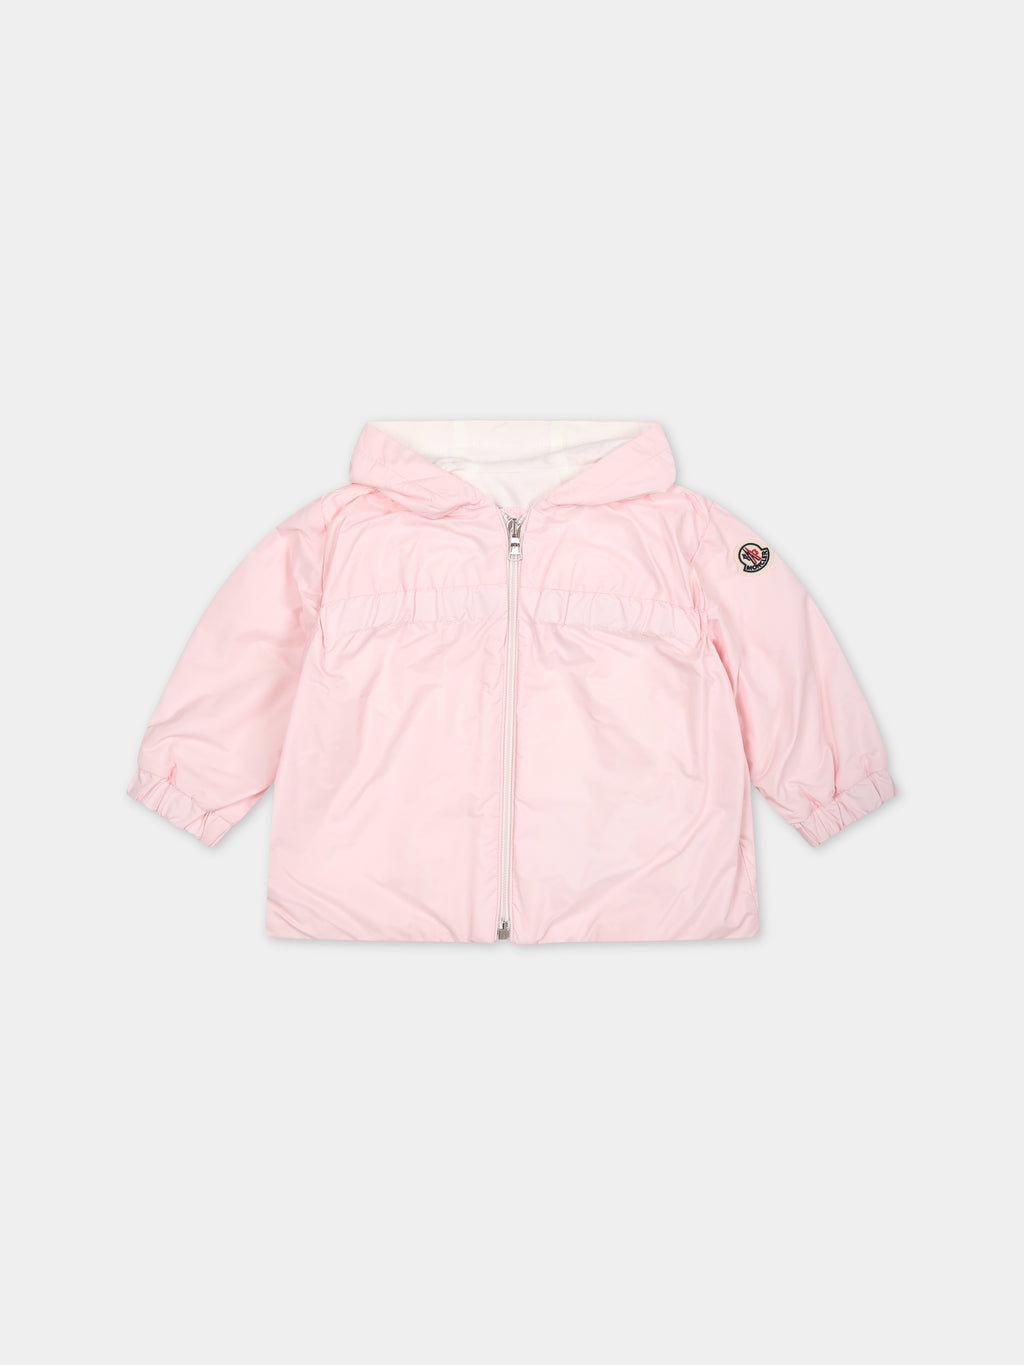 Giacca a vento Raka rosa per neonata con logo